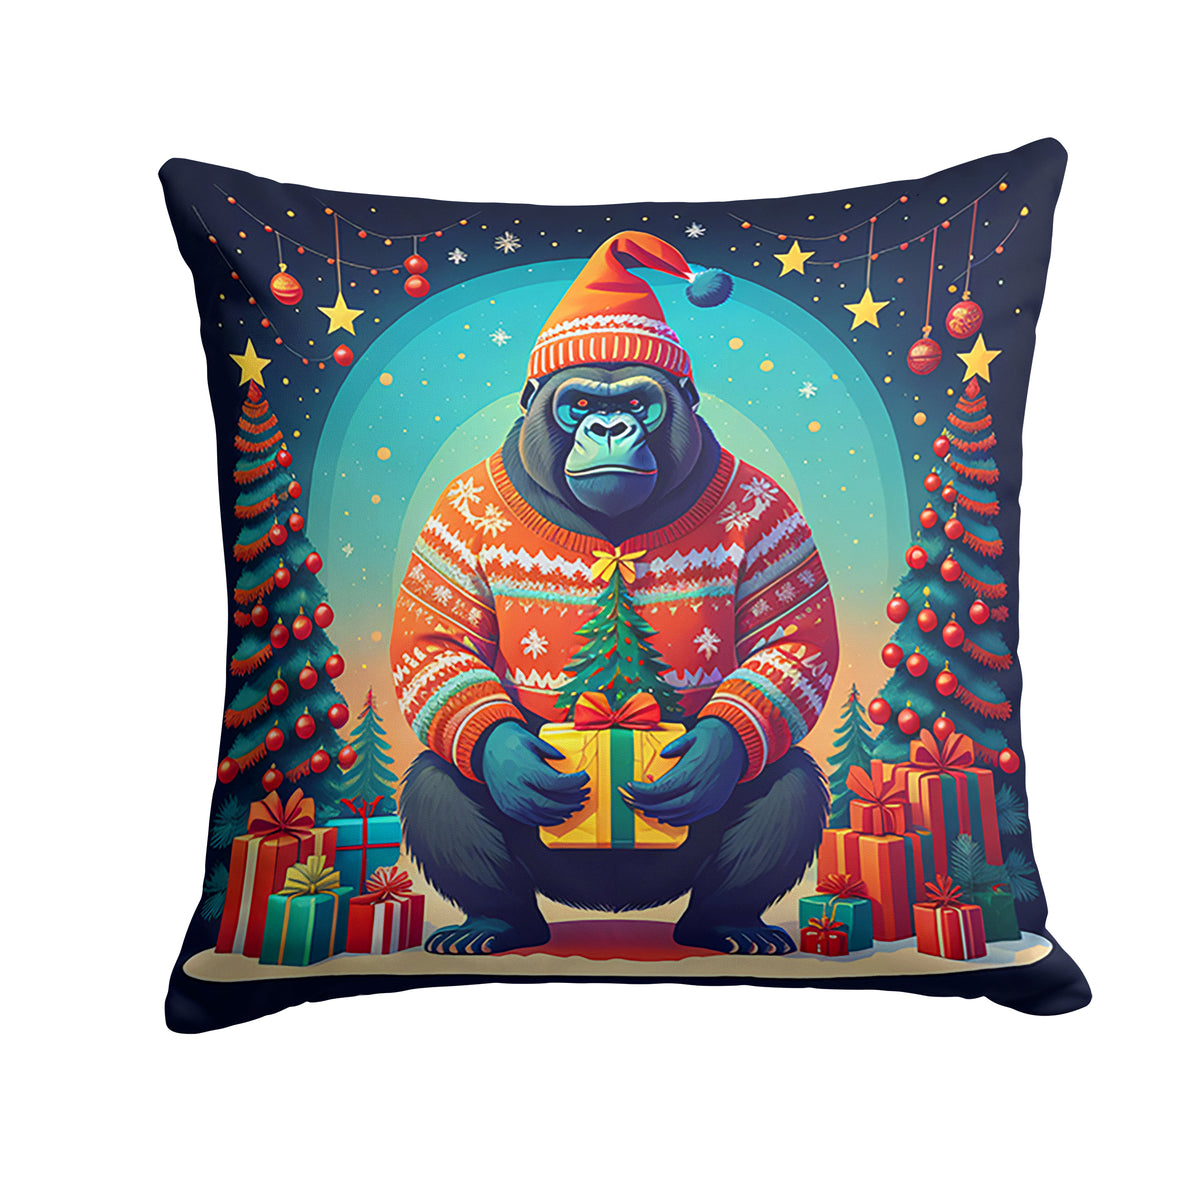 Buy this Gorilla Christmas Fabric Decorative Pillow